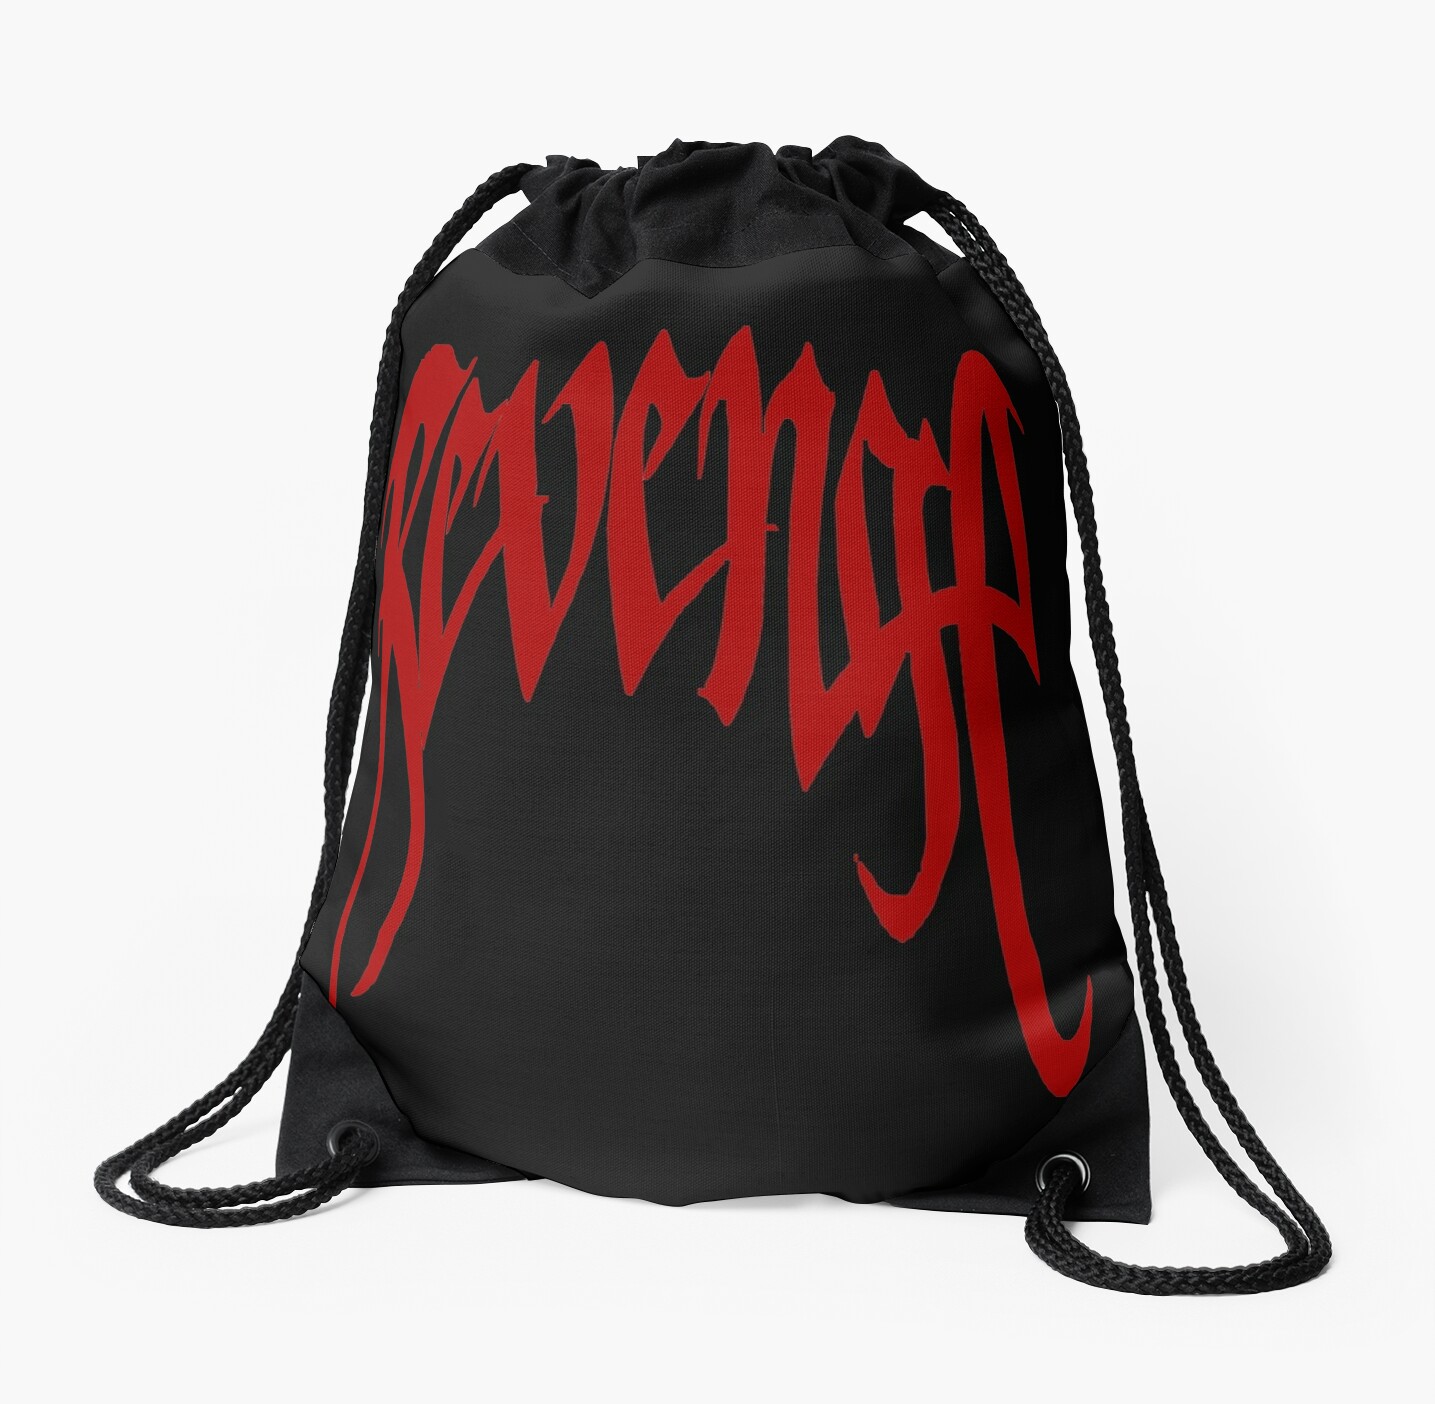 Revenge Xxxtentacion Drawstring Bag By Heirich Redbubble 